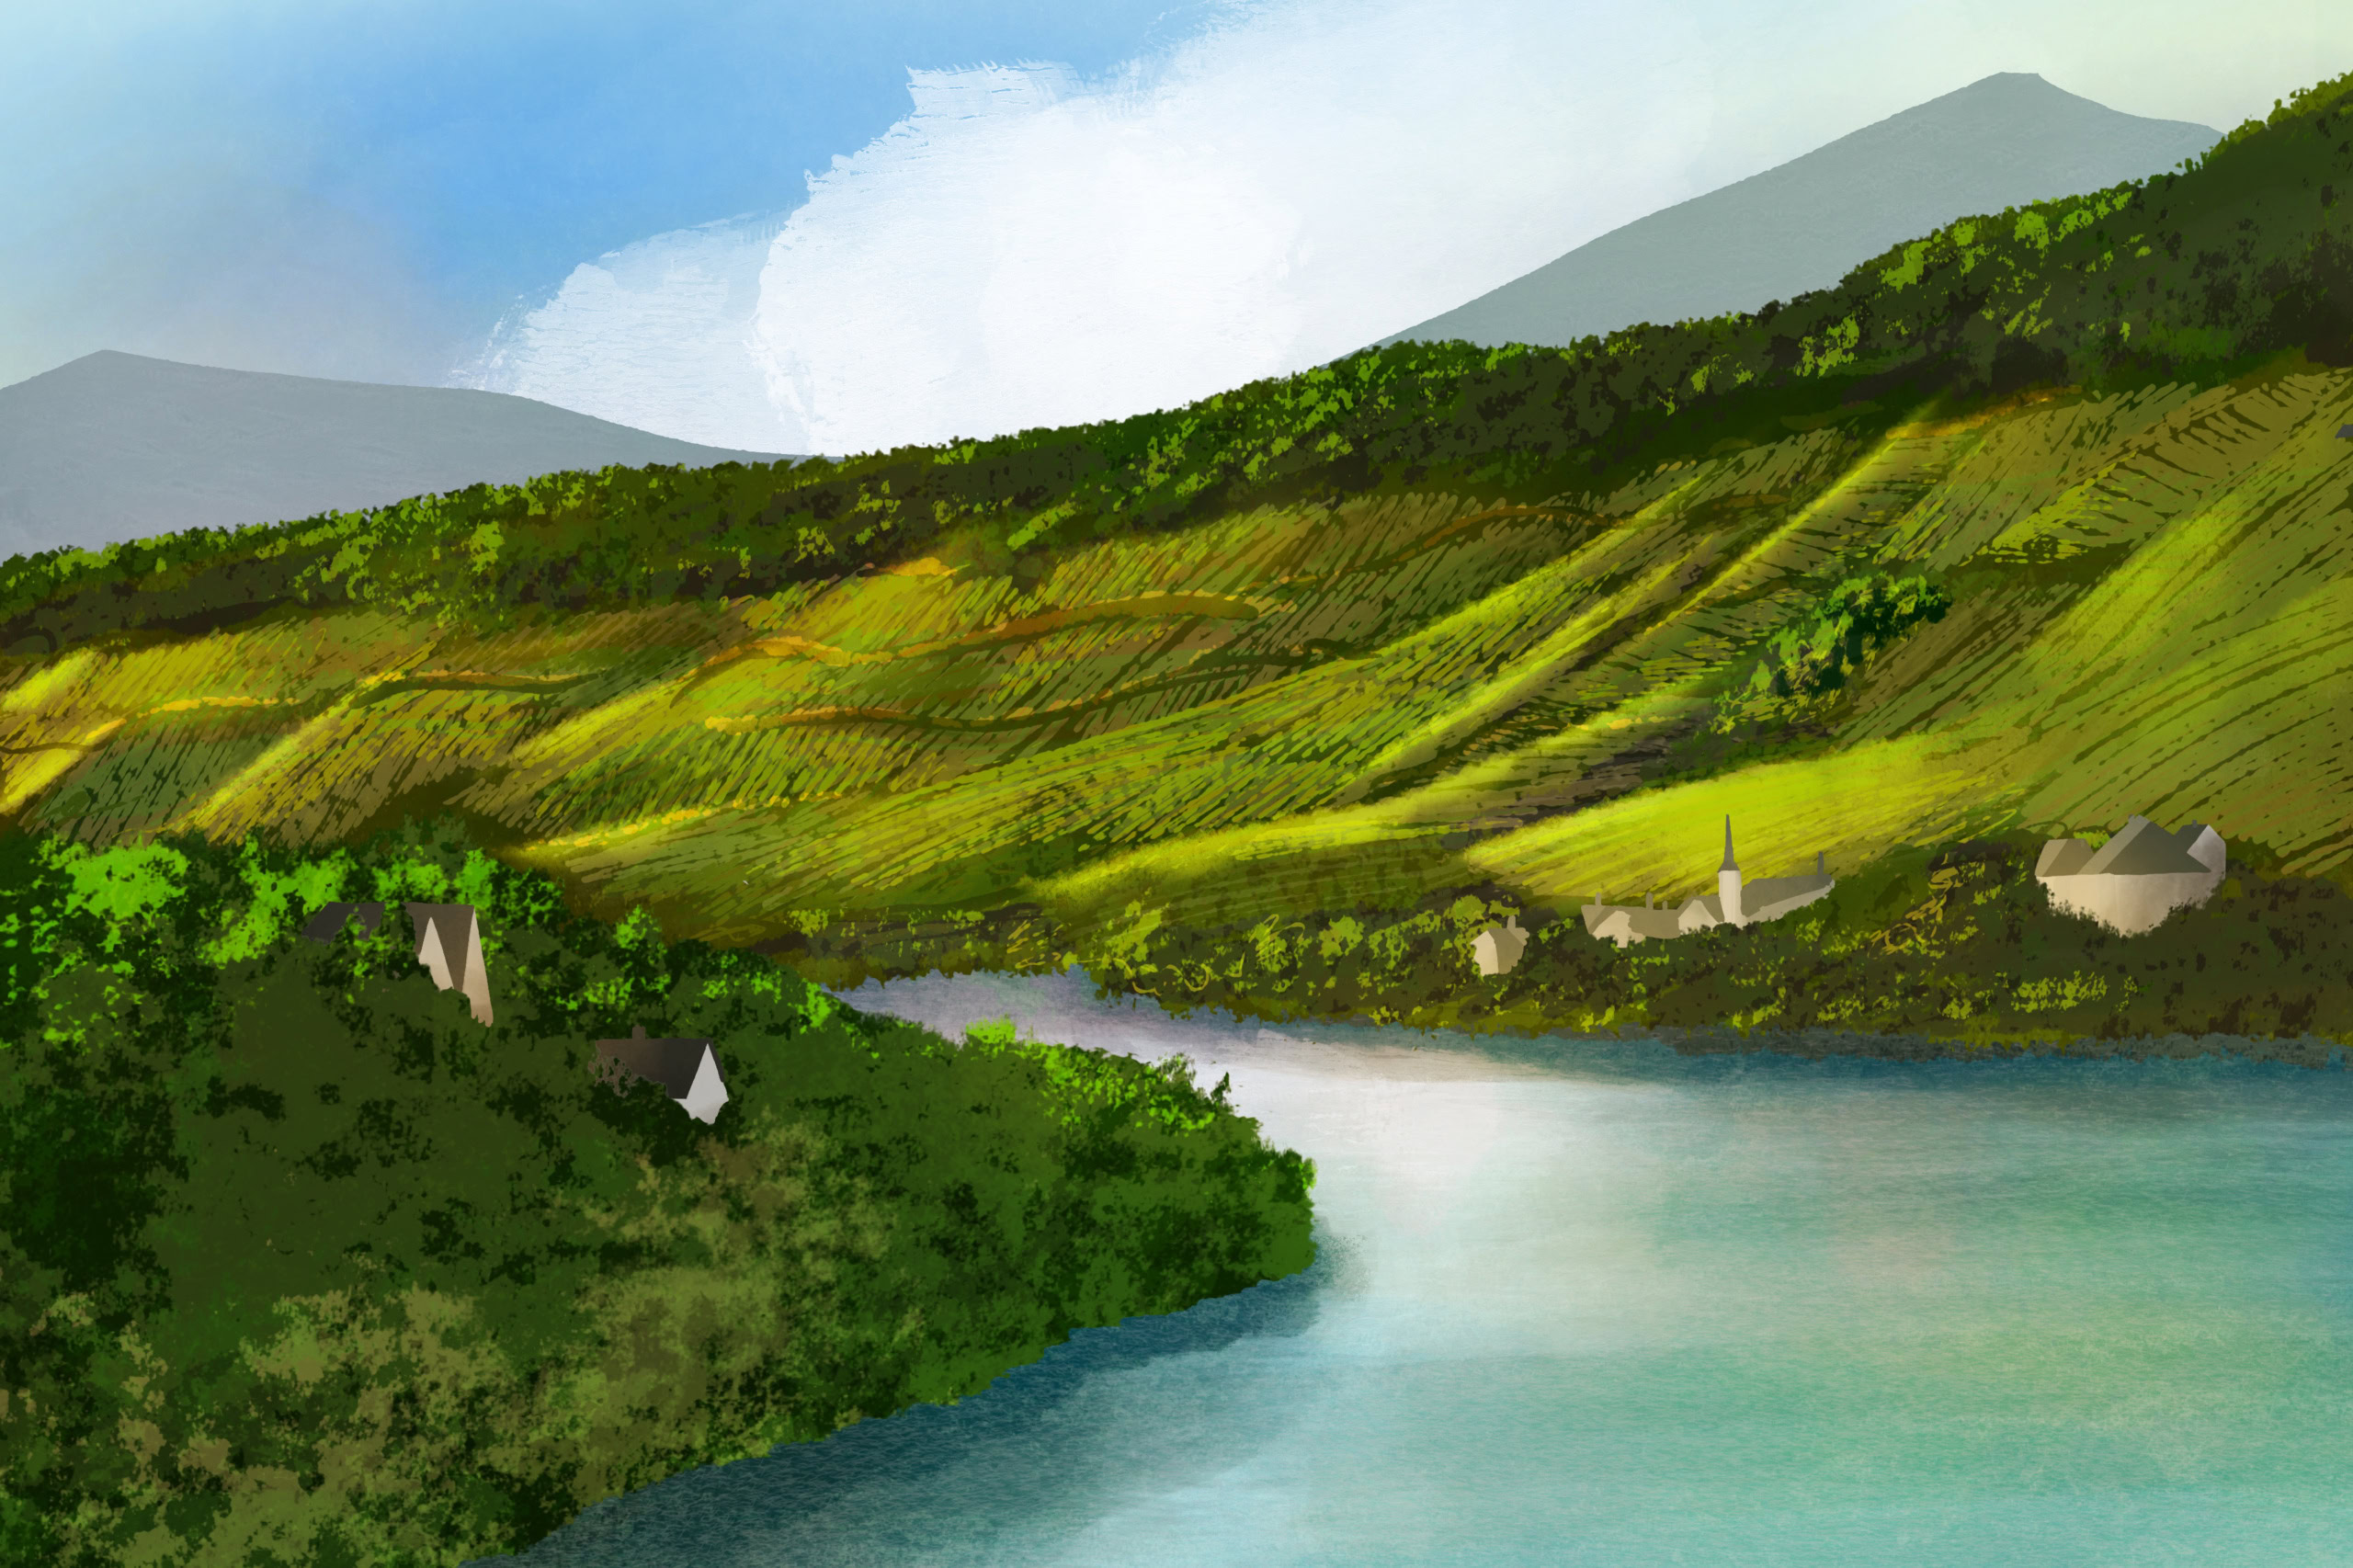 original illustration by Meg Make of Mosel river surrounded by vineyard slopes